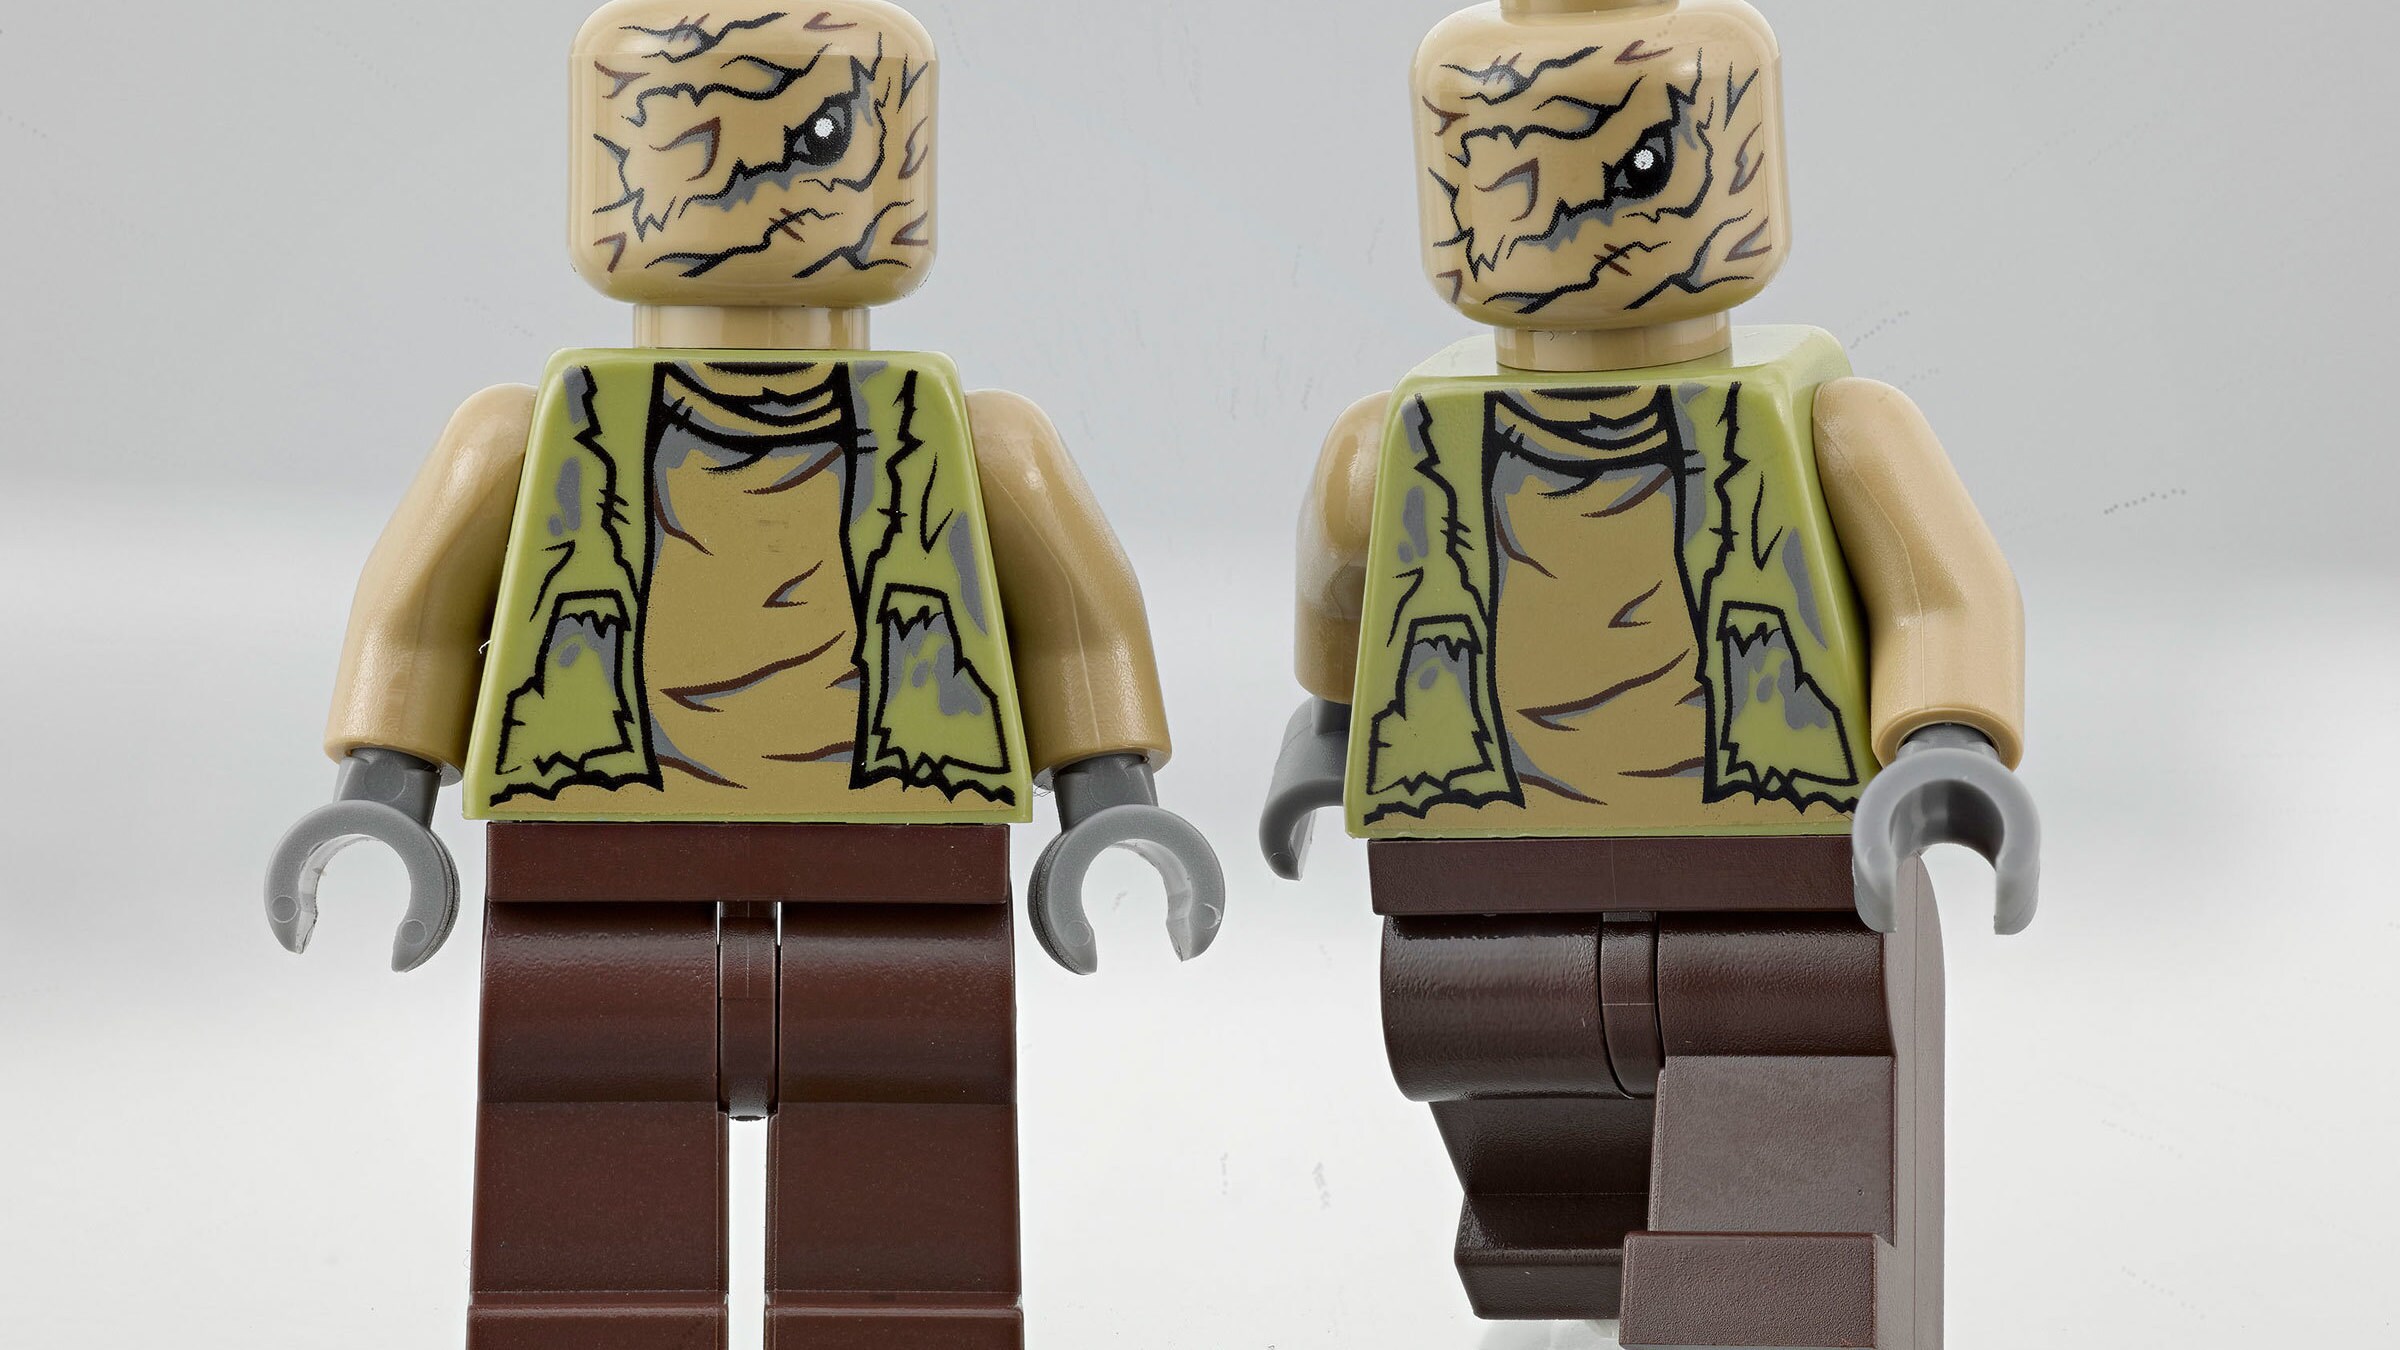 Unkar's Brute - LEGO Star Wars minifigure